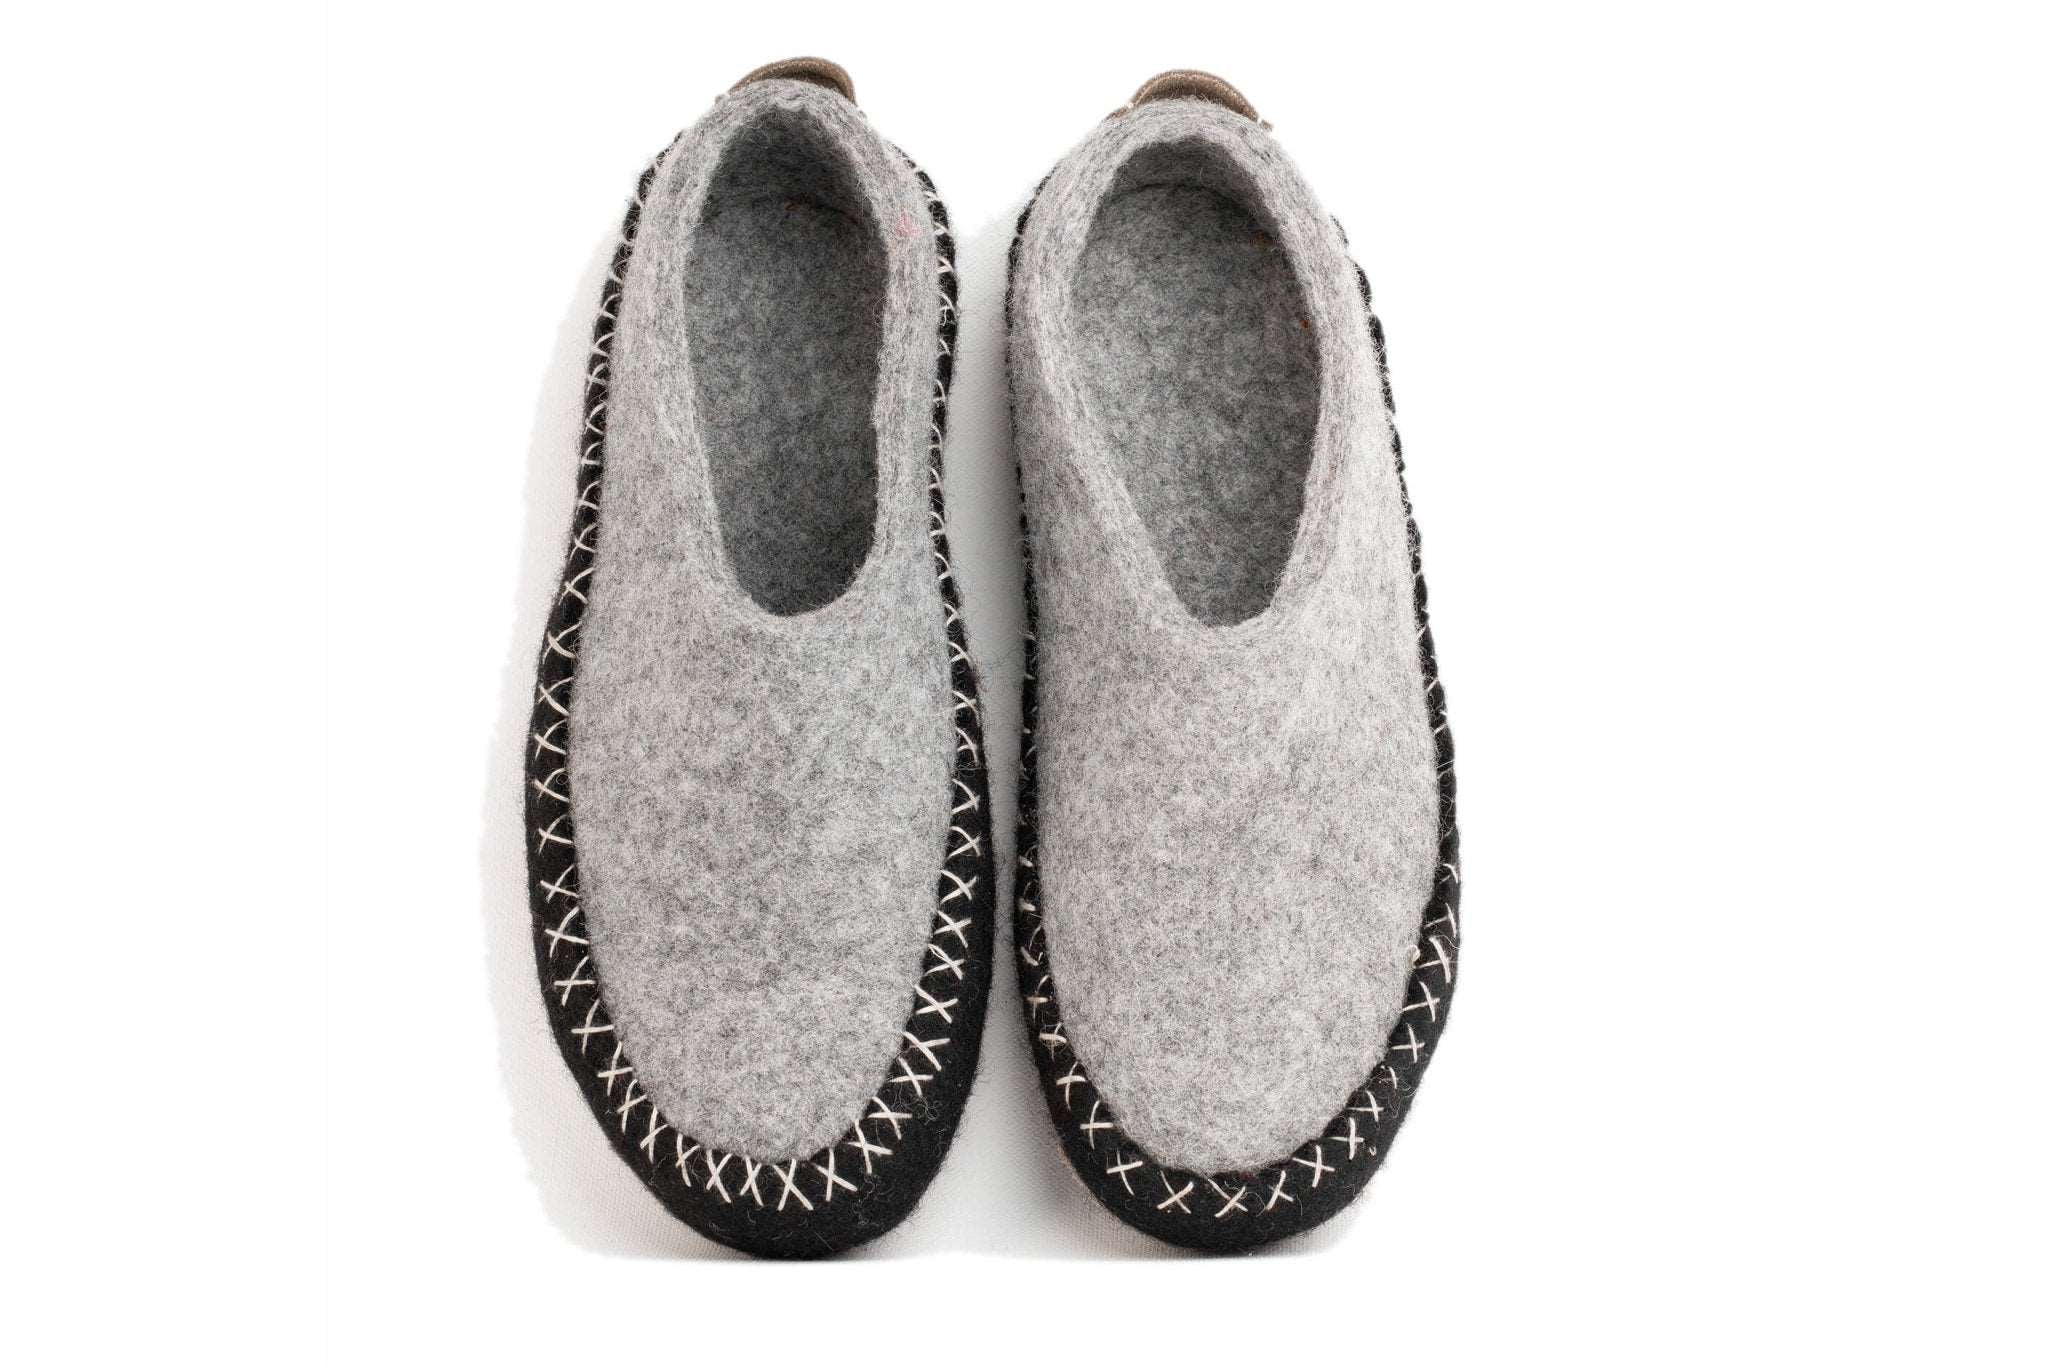 Indoor Open Heel Slipper With Leather Sole - Black & Grey - Woollyes